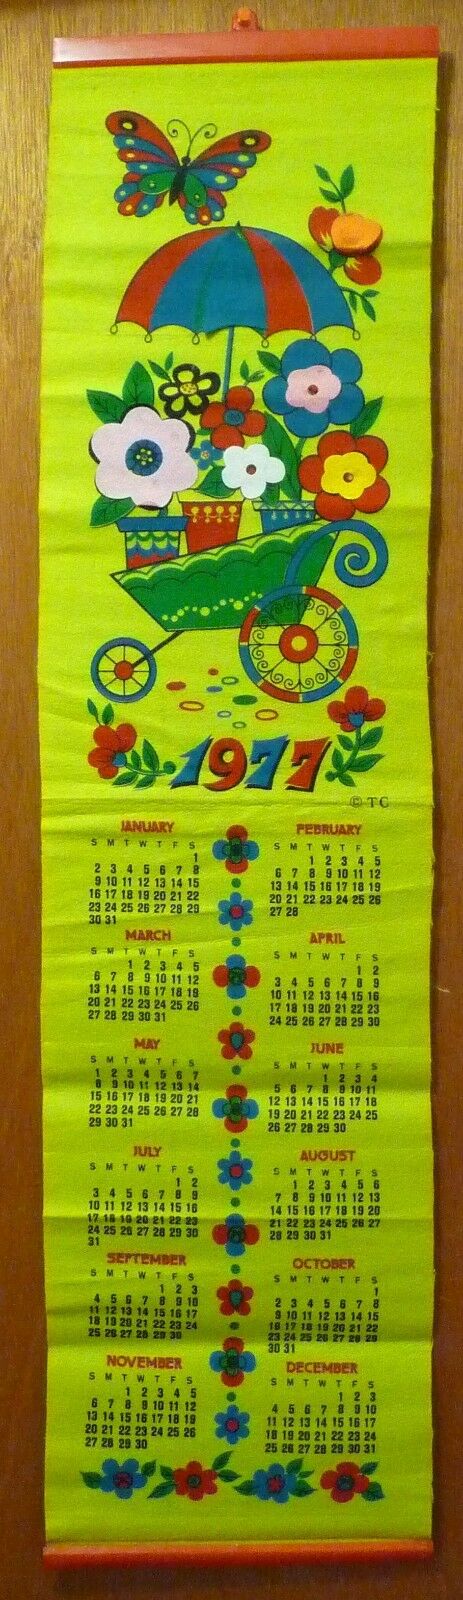 1977 Felt Calendar